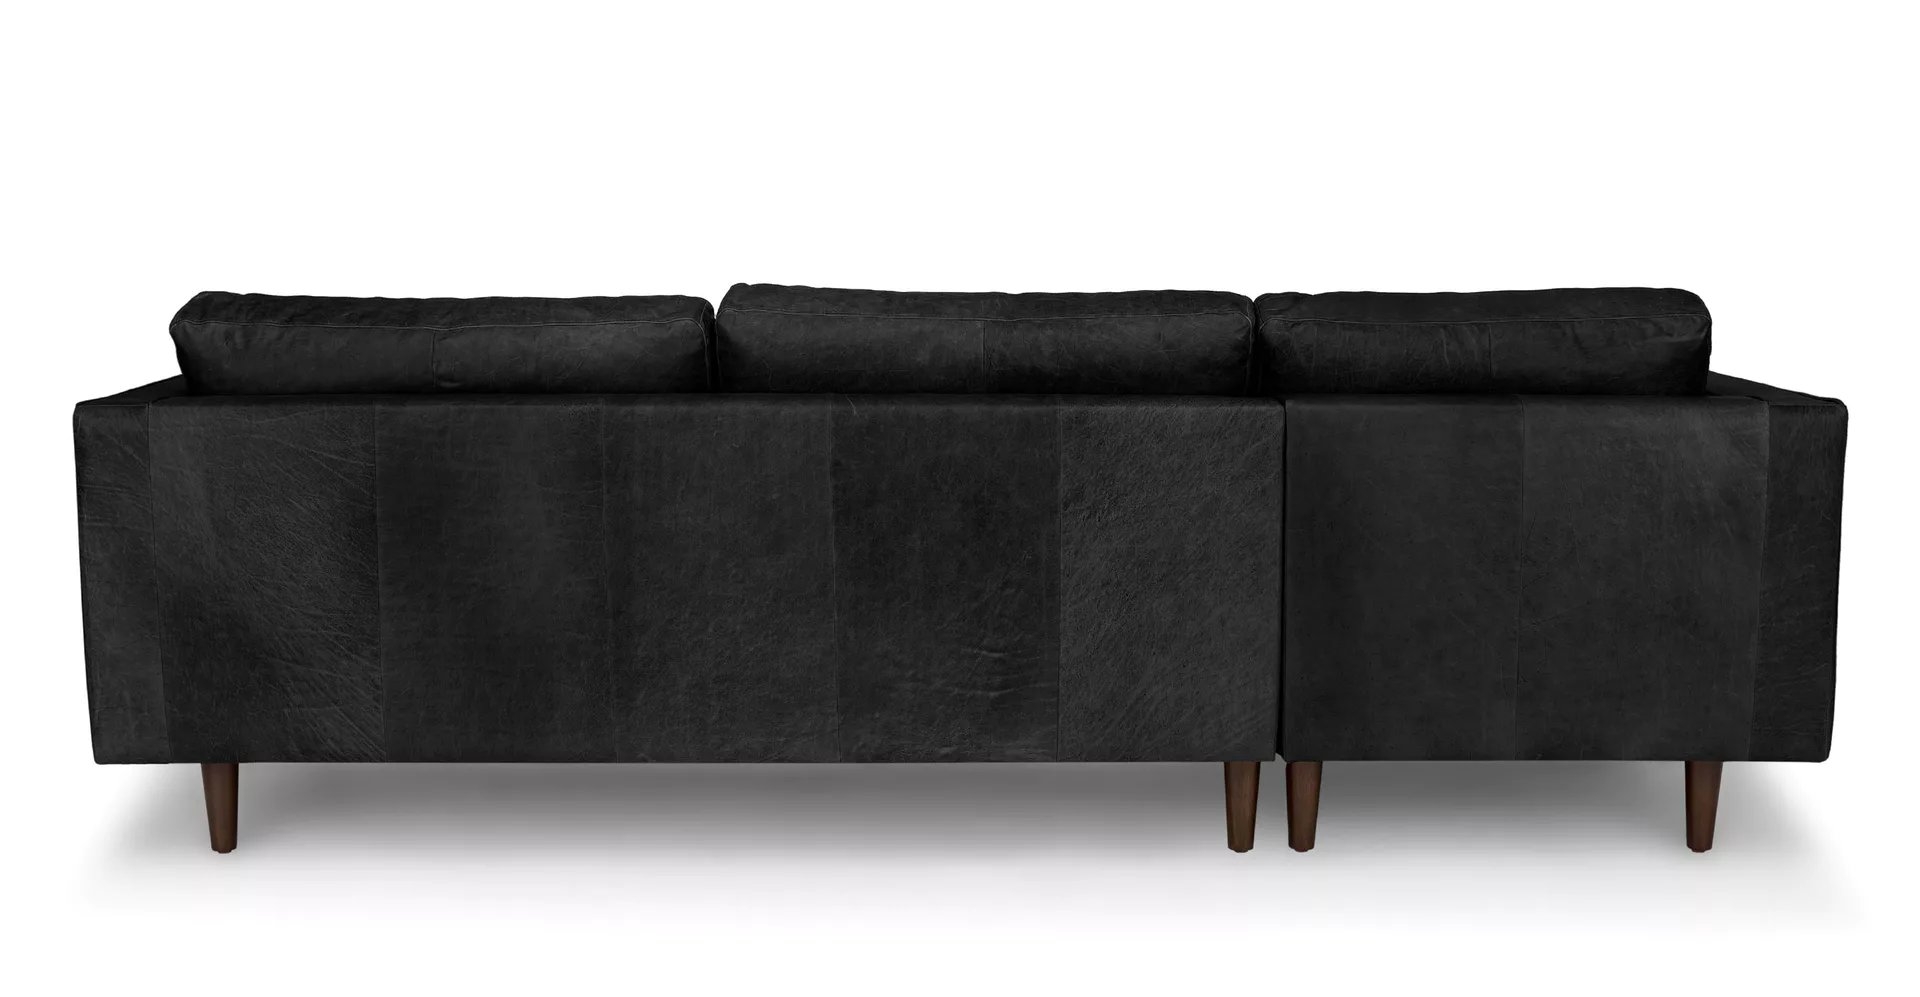 Sven Oxford Black Left Sectional Sofa - Image 2